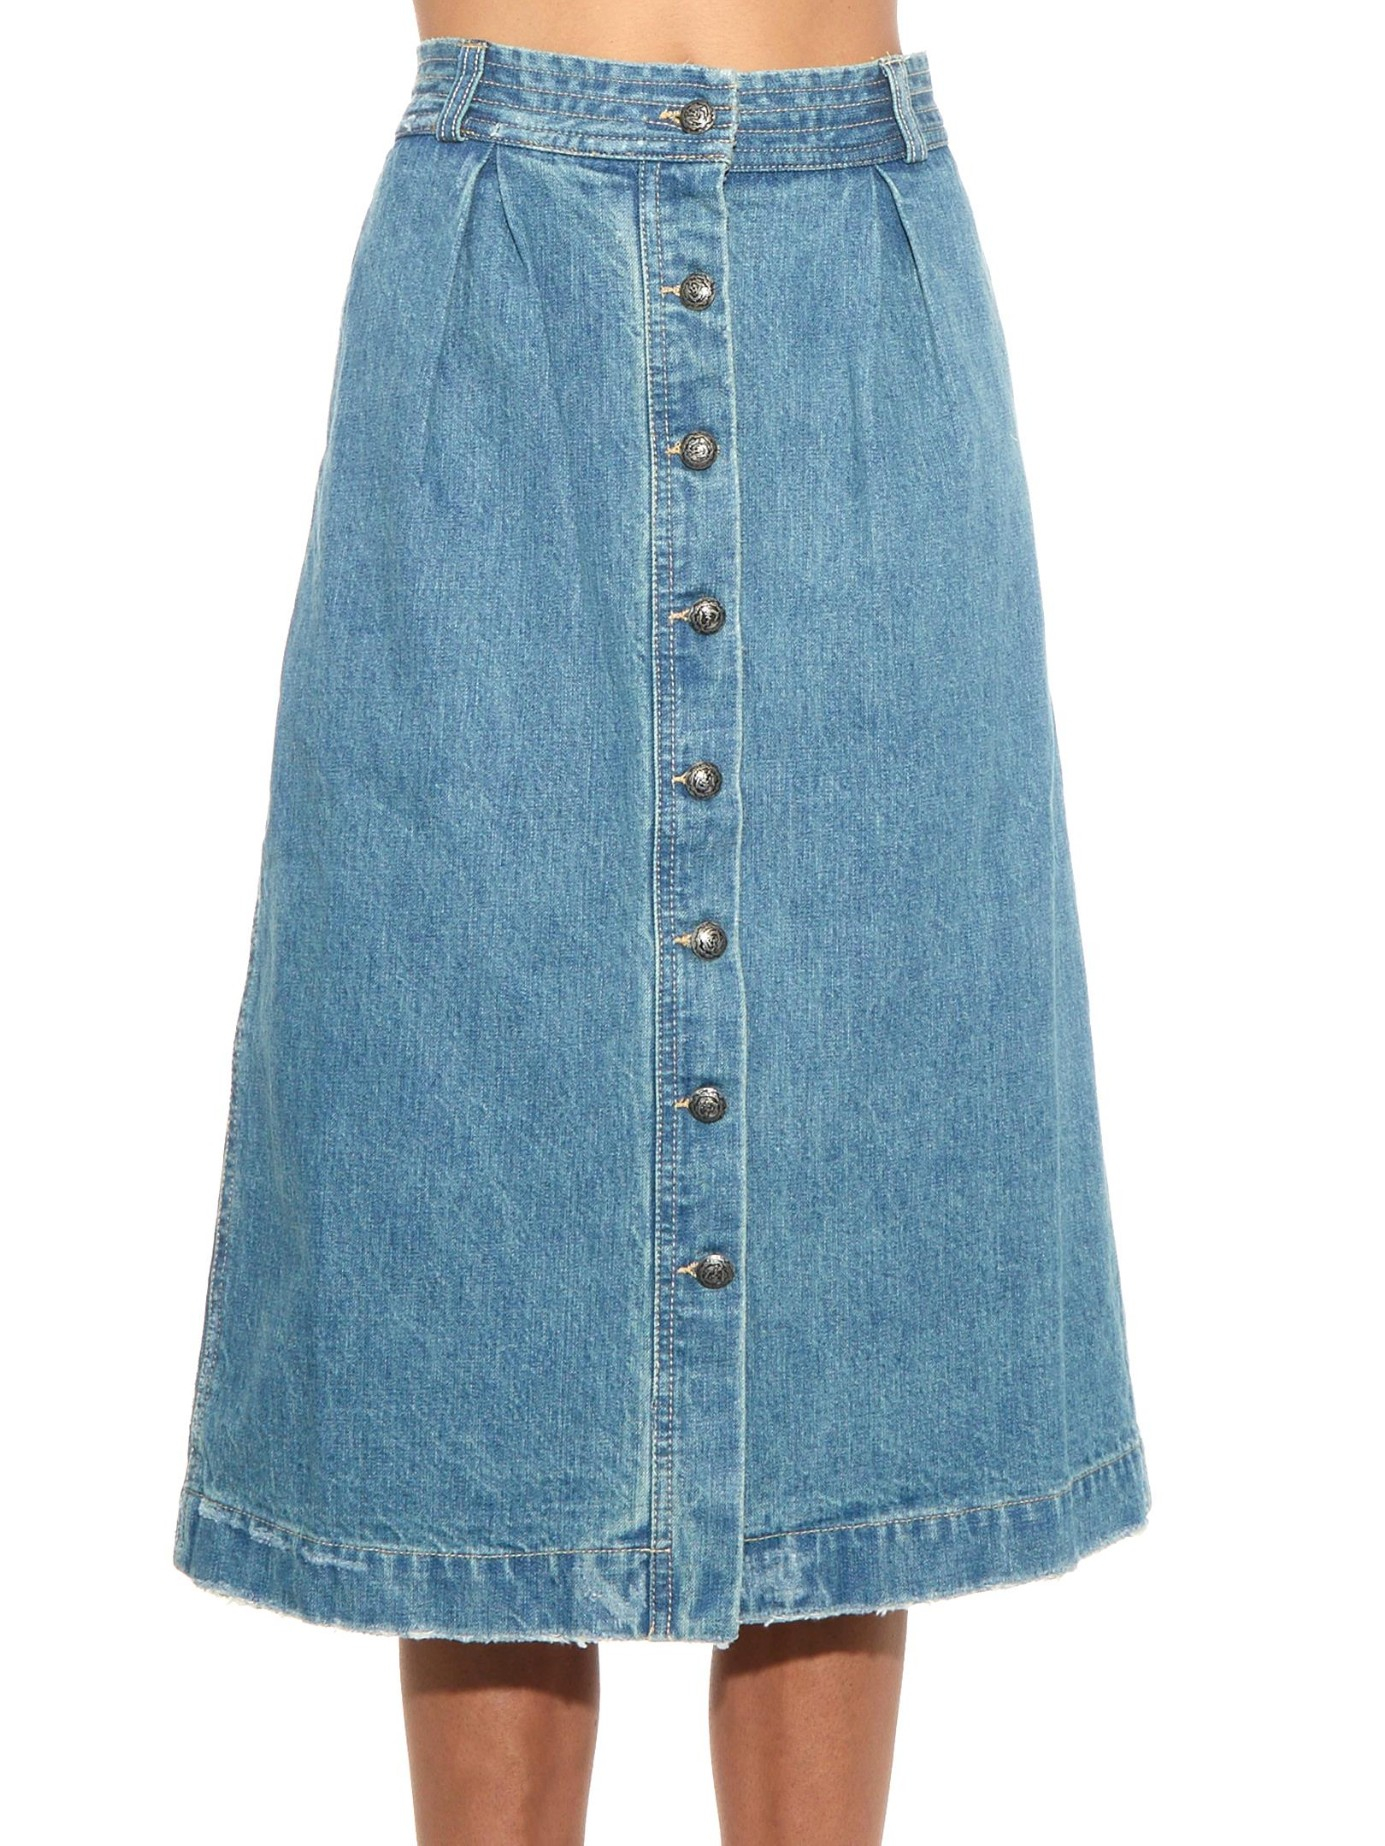 Lyst - Sea A-line Denim Skirt in Blue